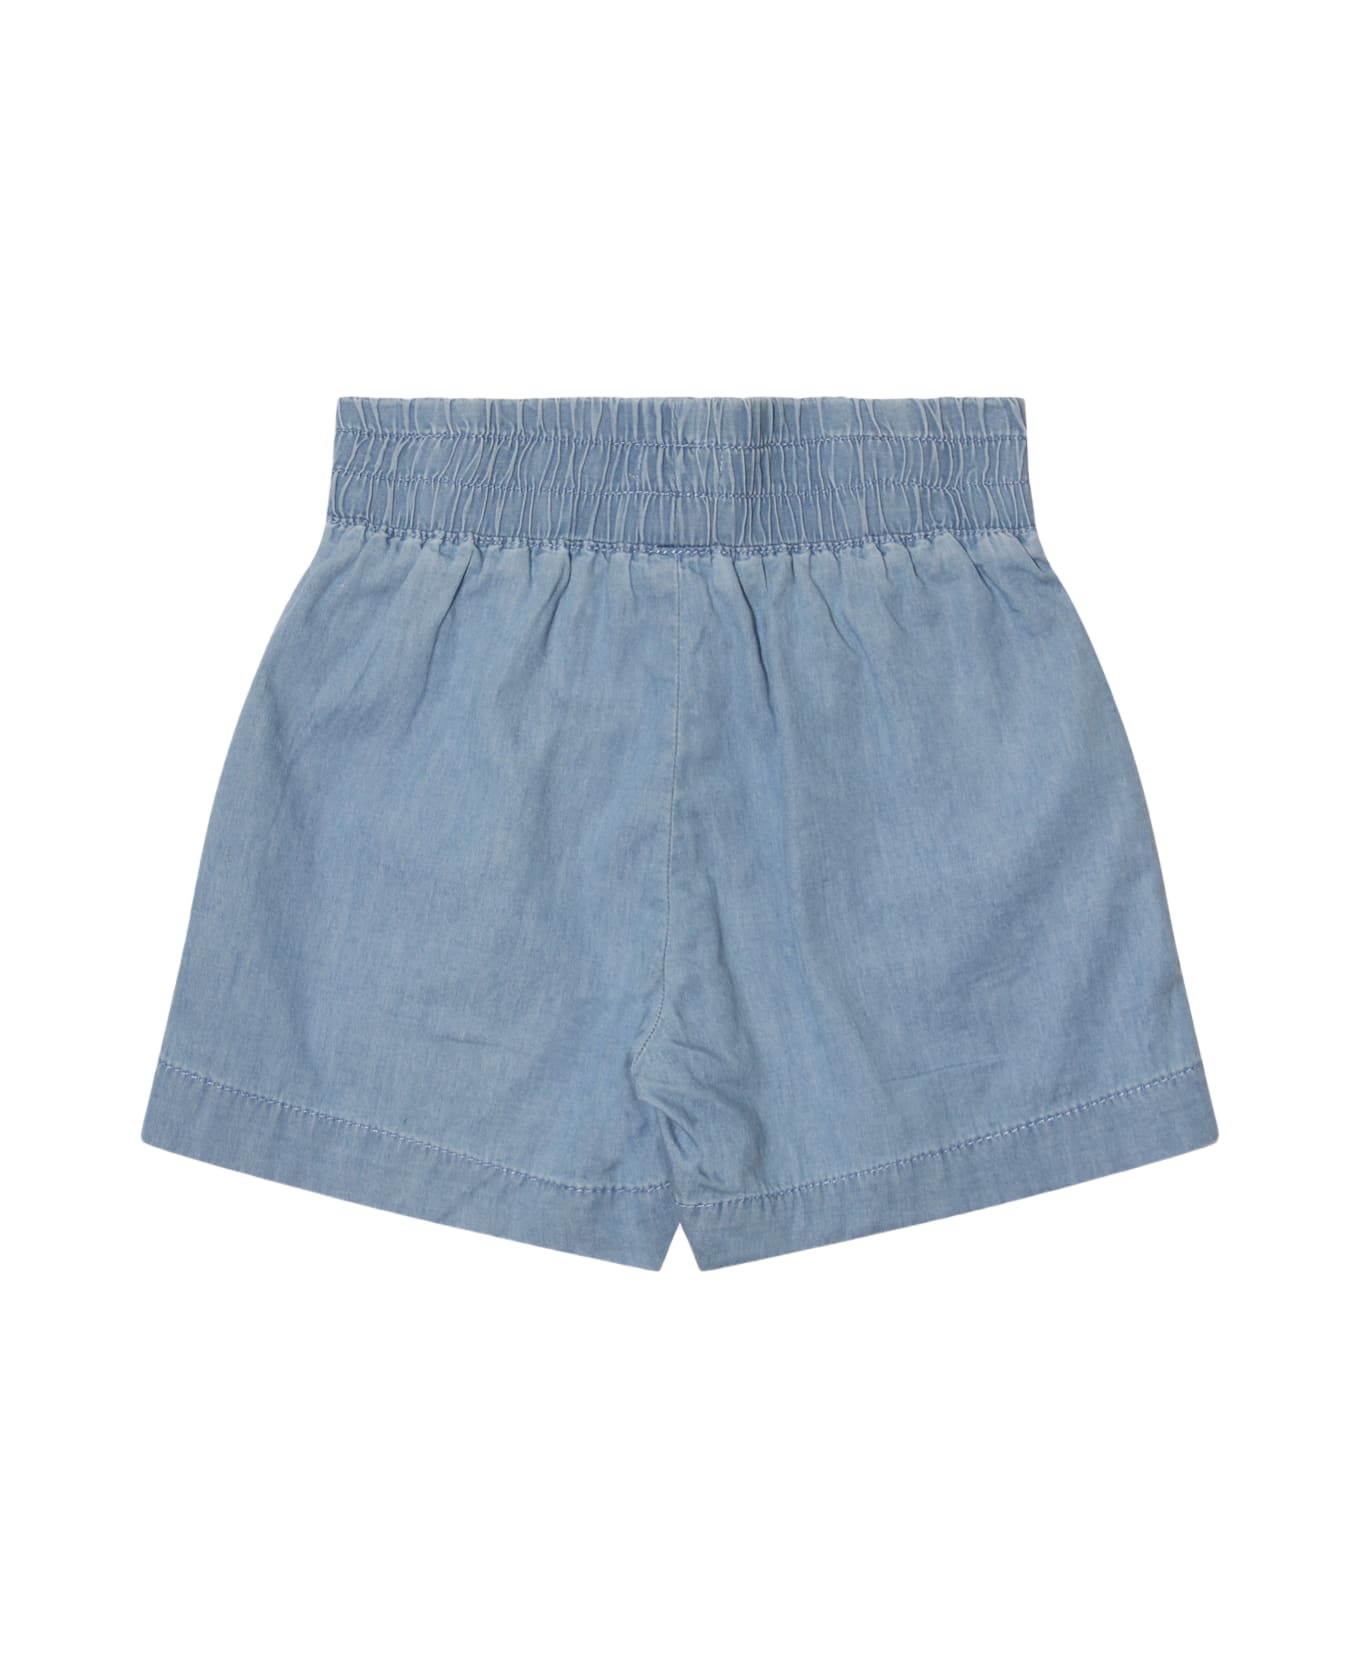 Billieblush Blue Cotton Shorts - DOUBLE STONE/BROSSAGE